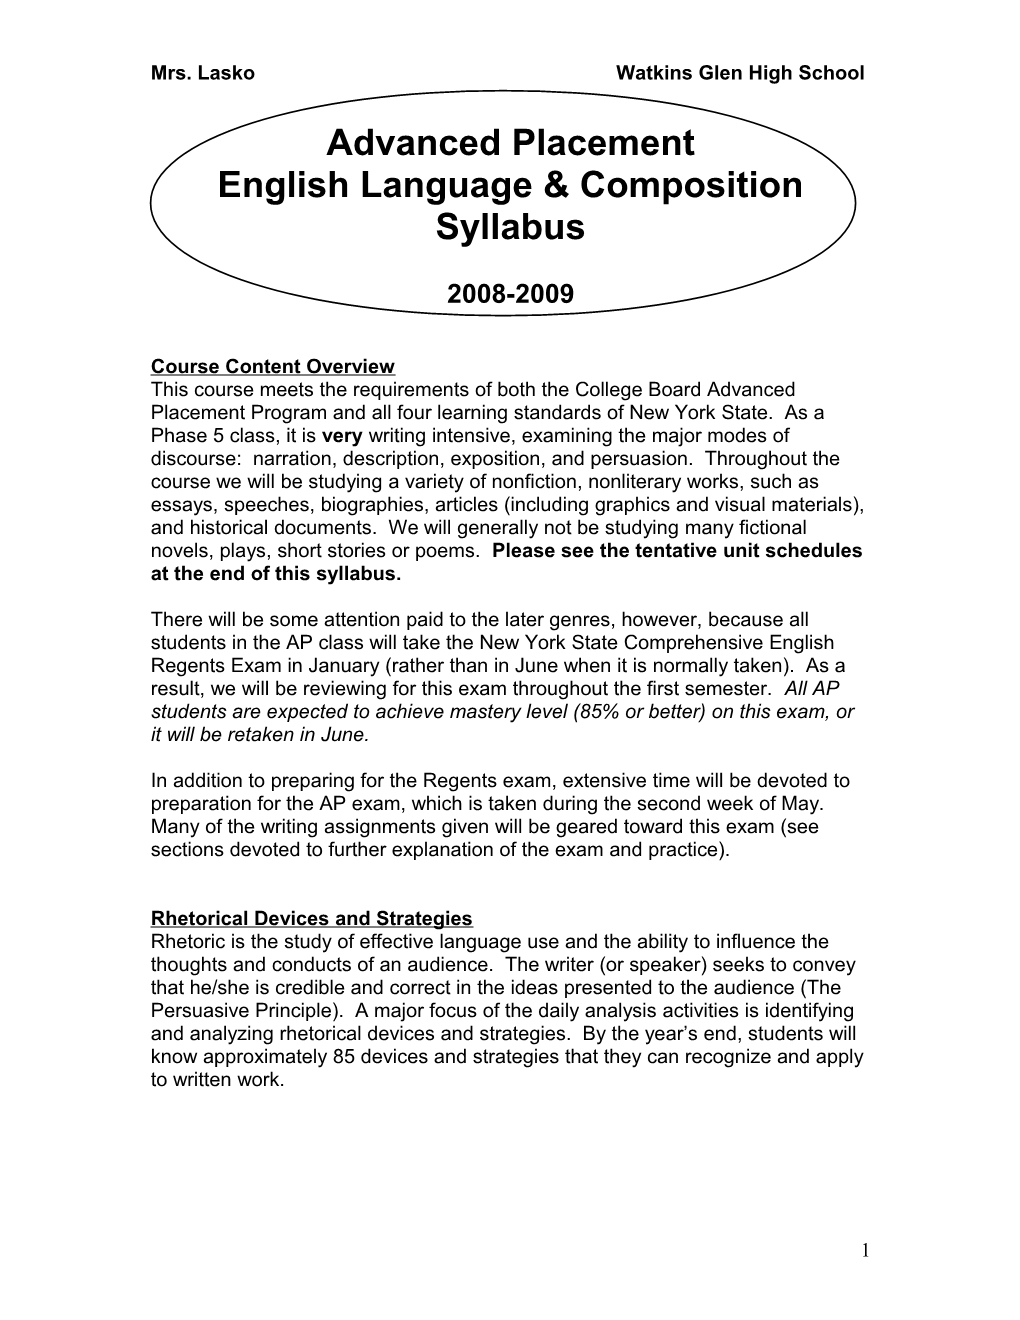 English Language & Composition Syllabus